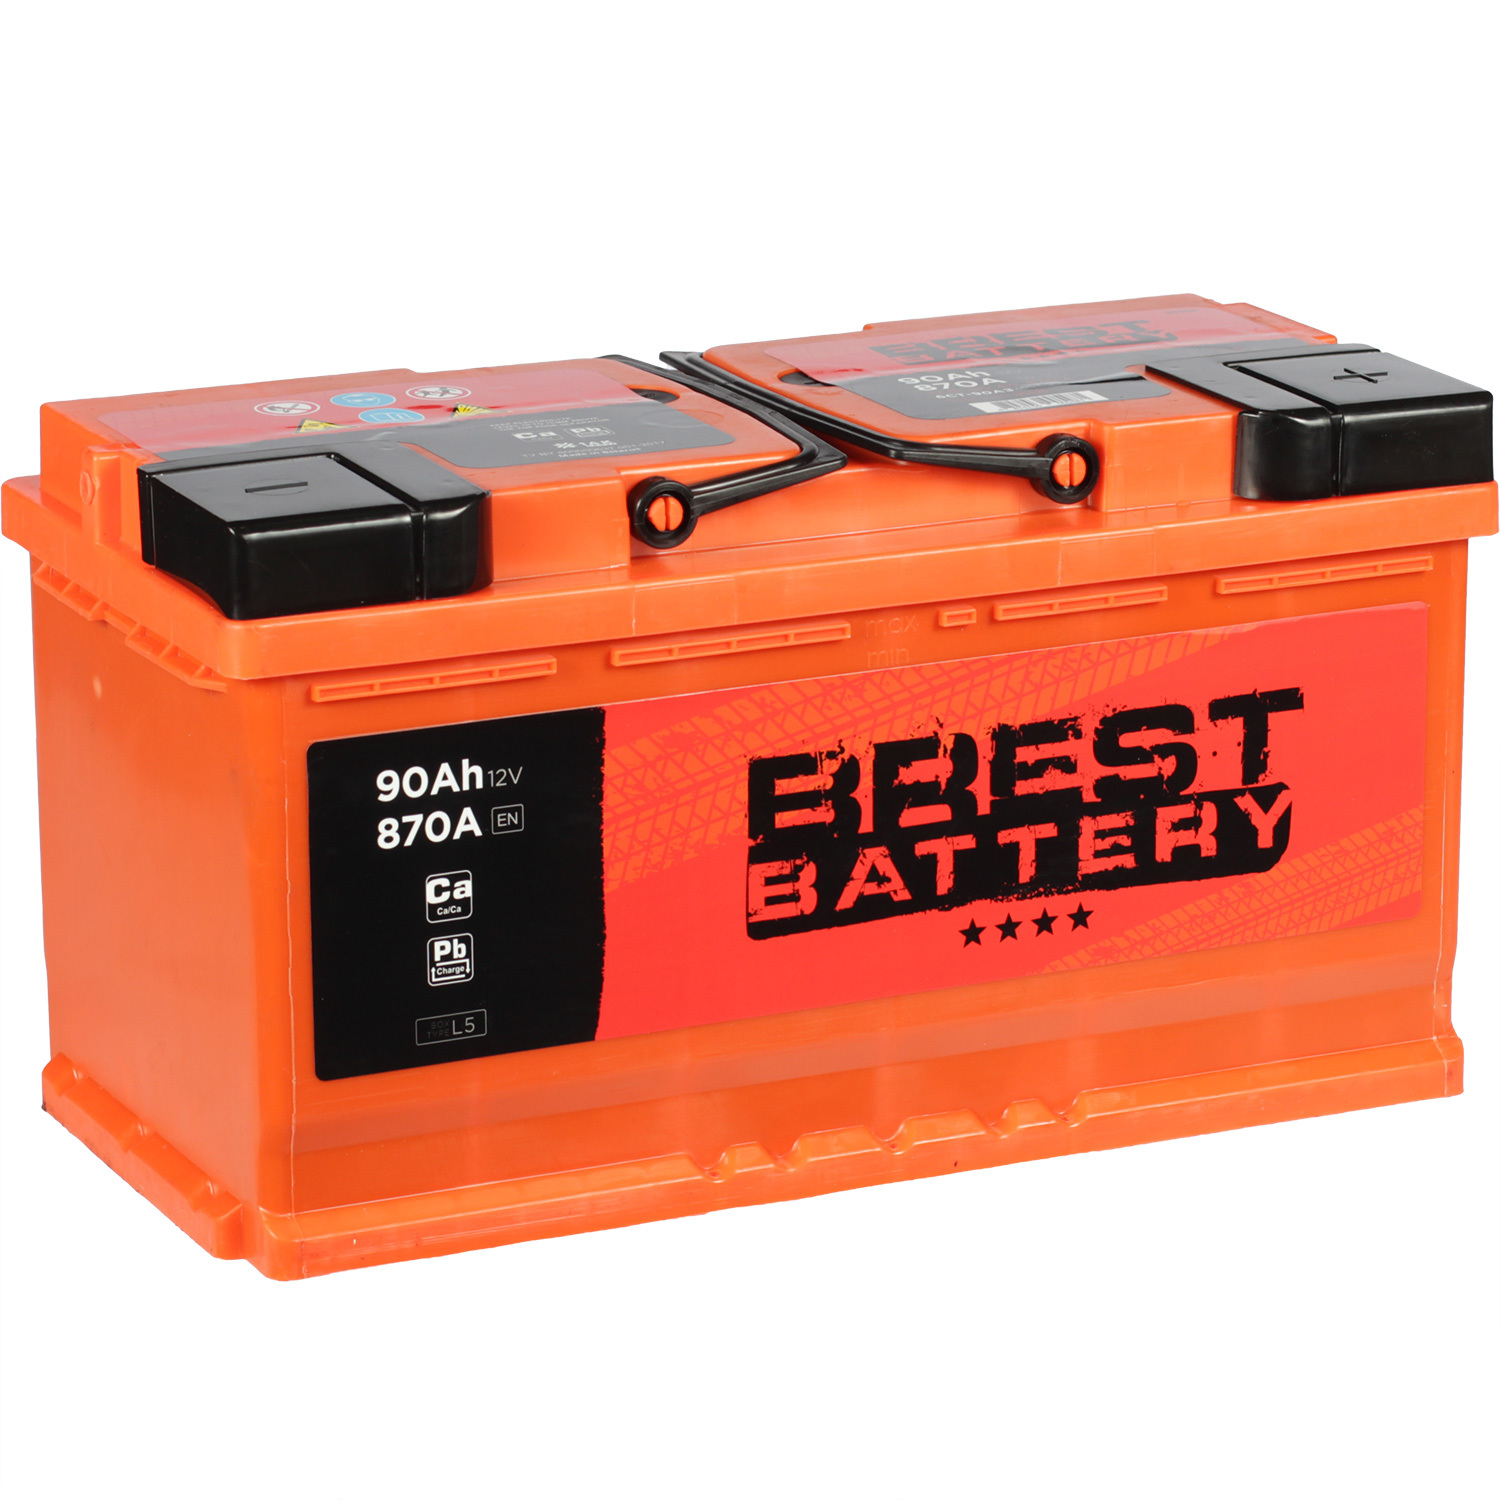 brest battery автомобильный аккумулятор brest battery 110 ач обратная полярность l5 Brest Battery Автомобильный аккумулятор Brest Battery 90 Ач обратная полярность L5